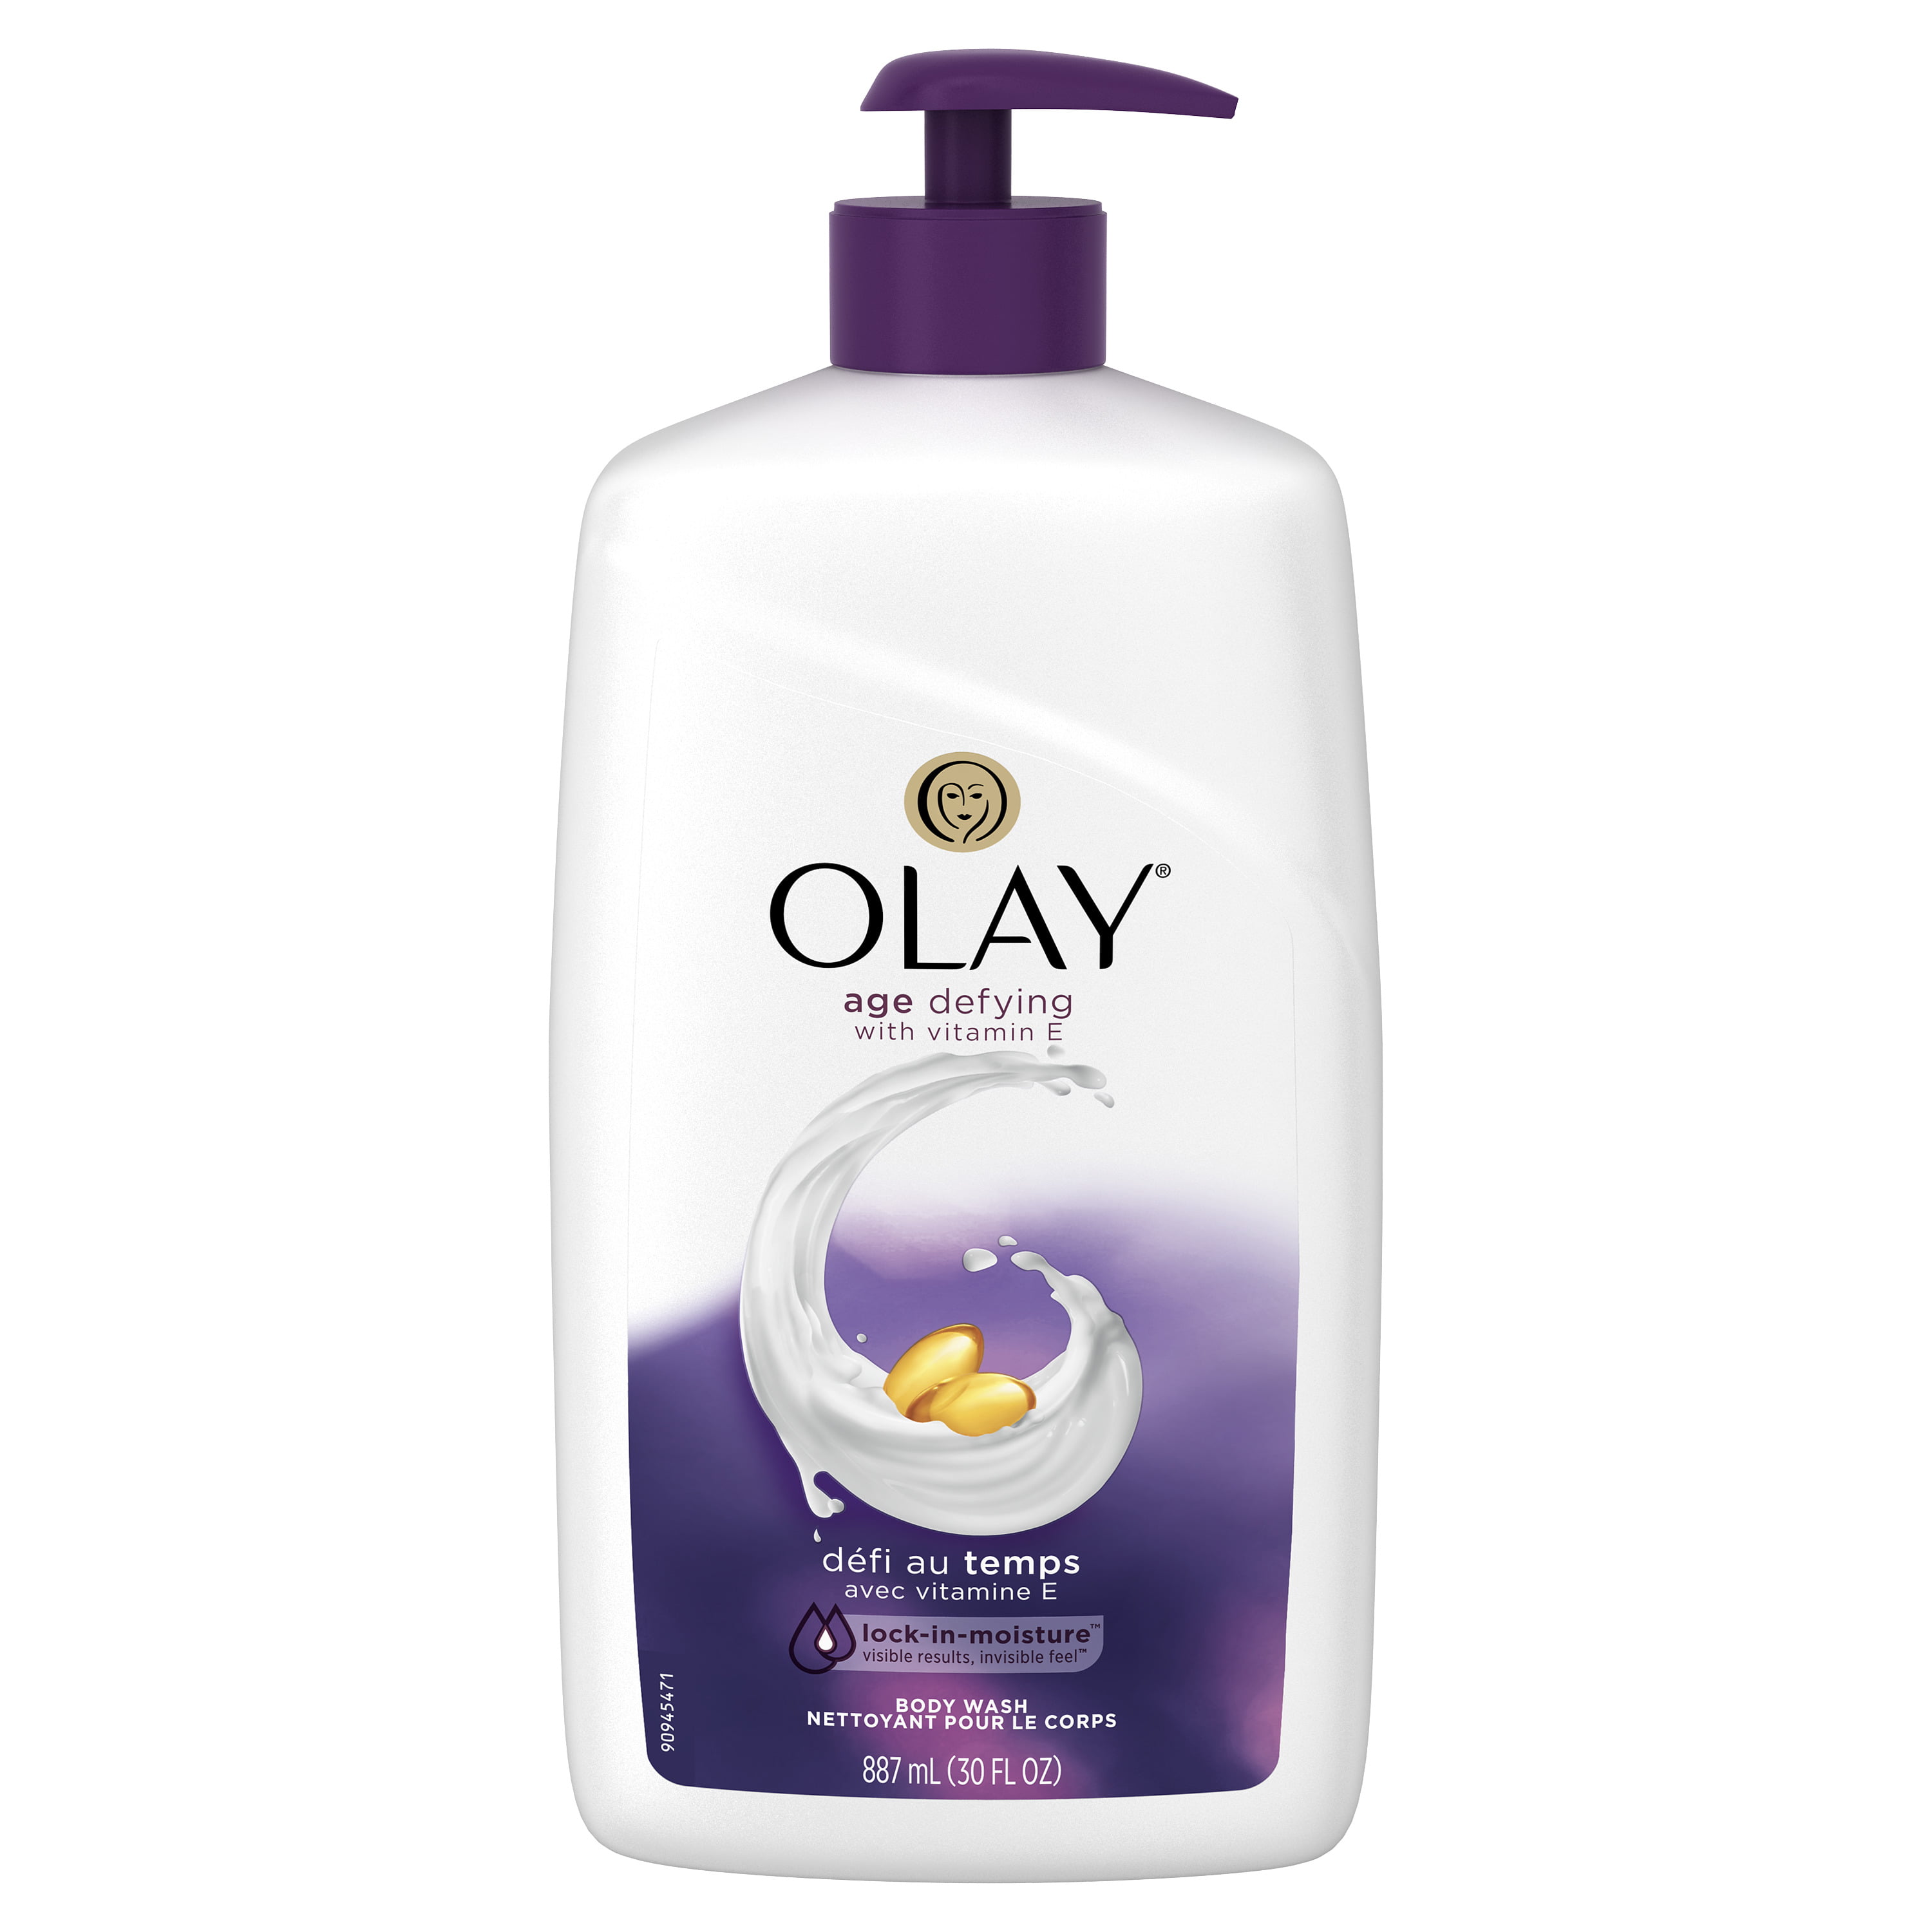 Olay Age Defying with Vitamin E Body Wash, 30 oz